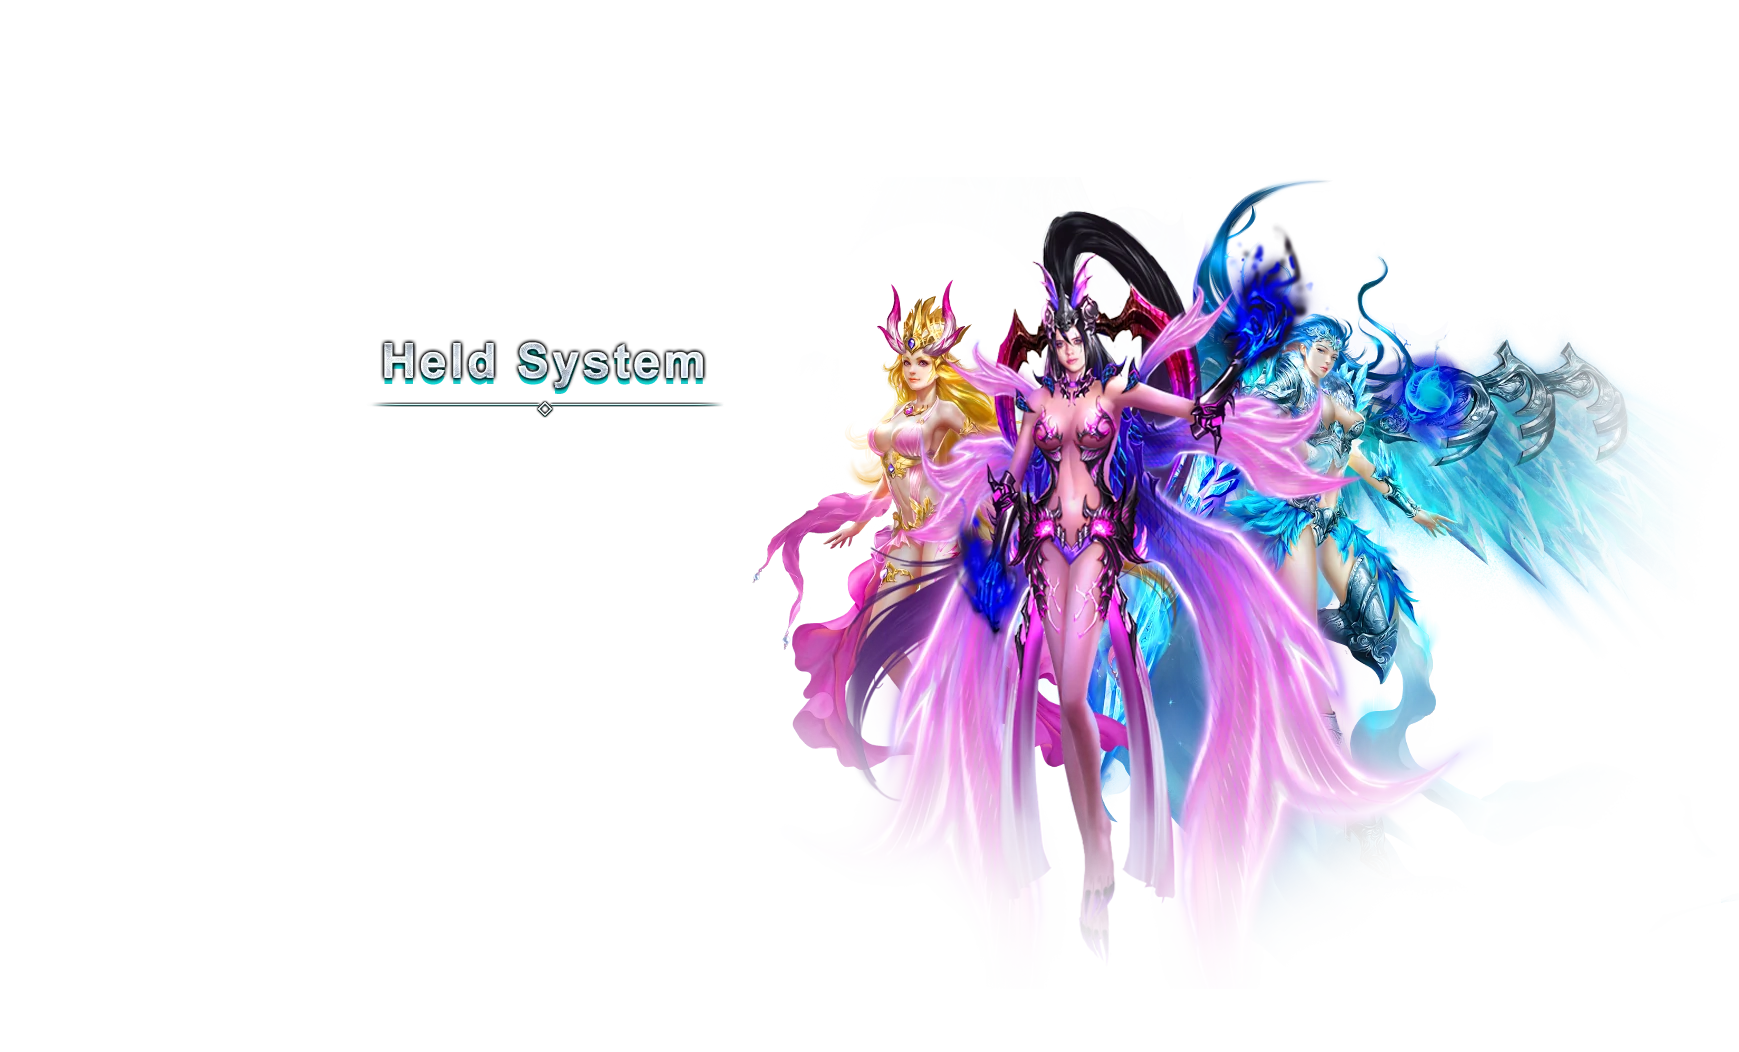 Held System